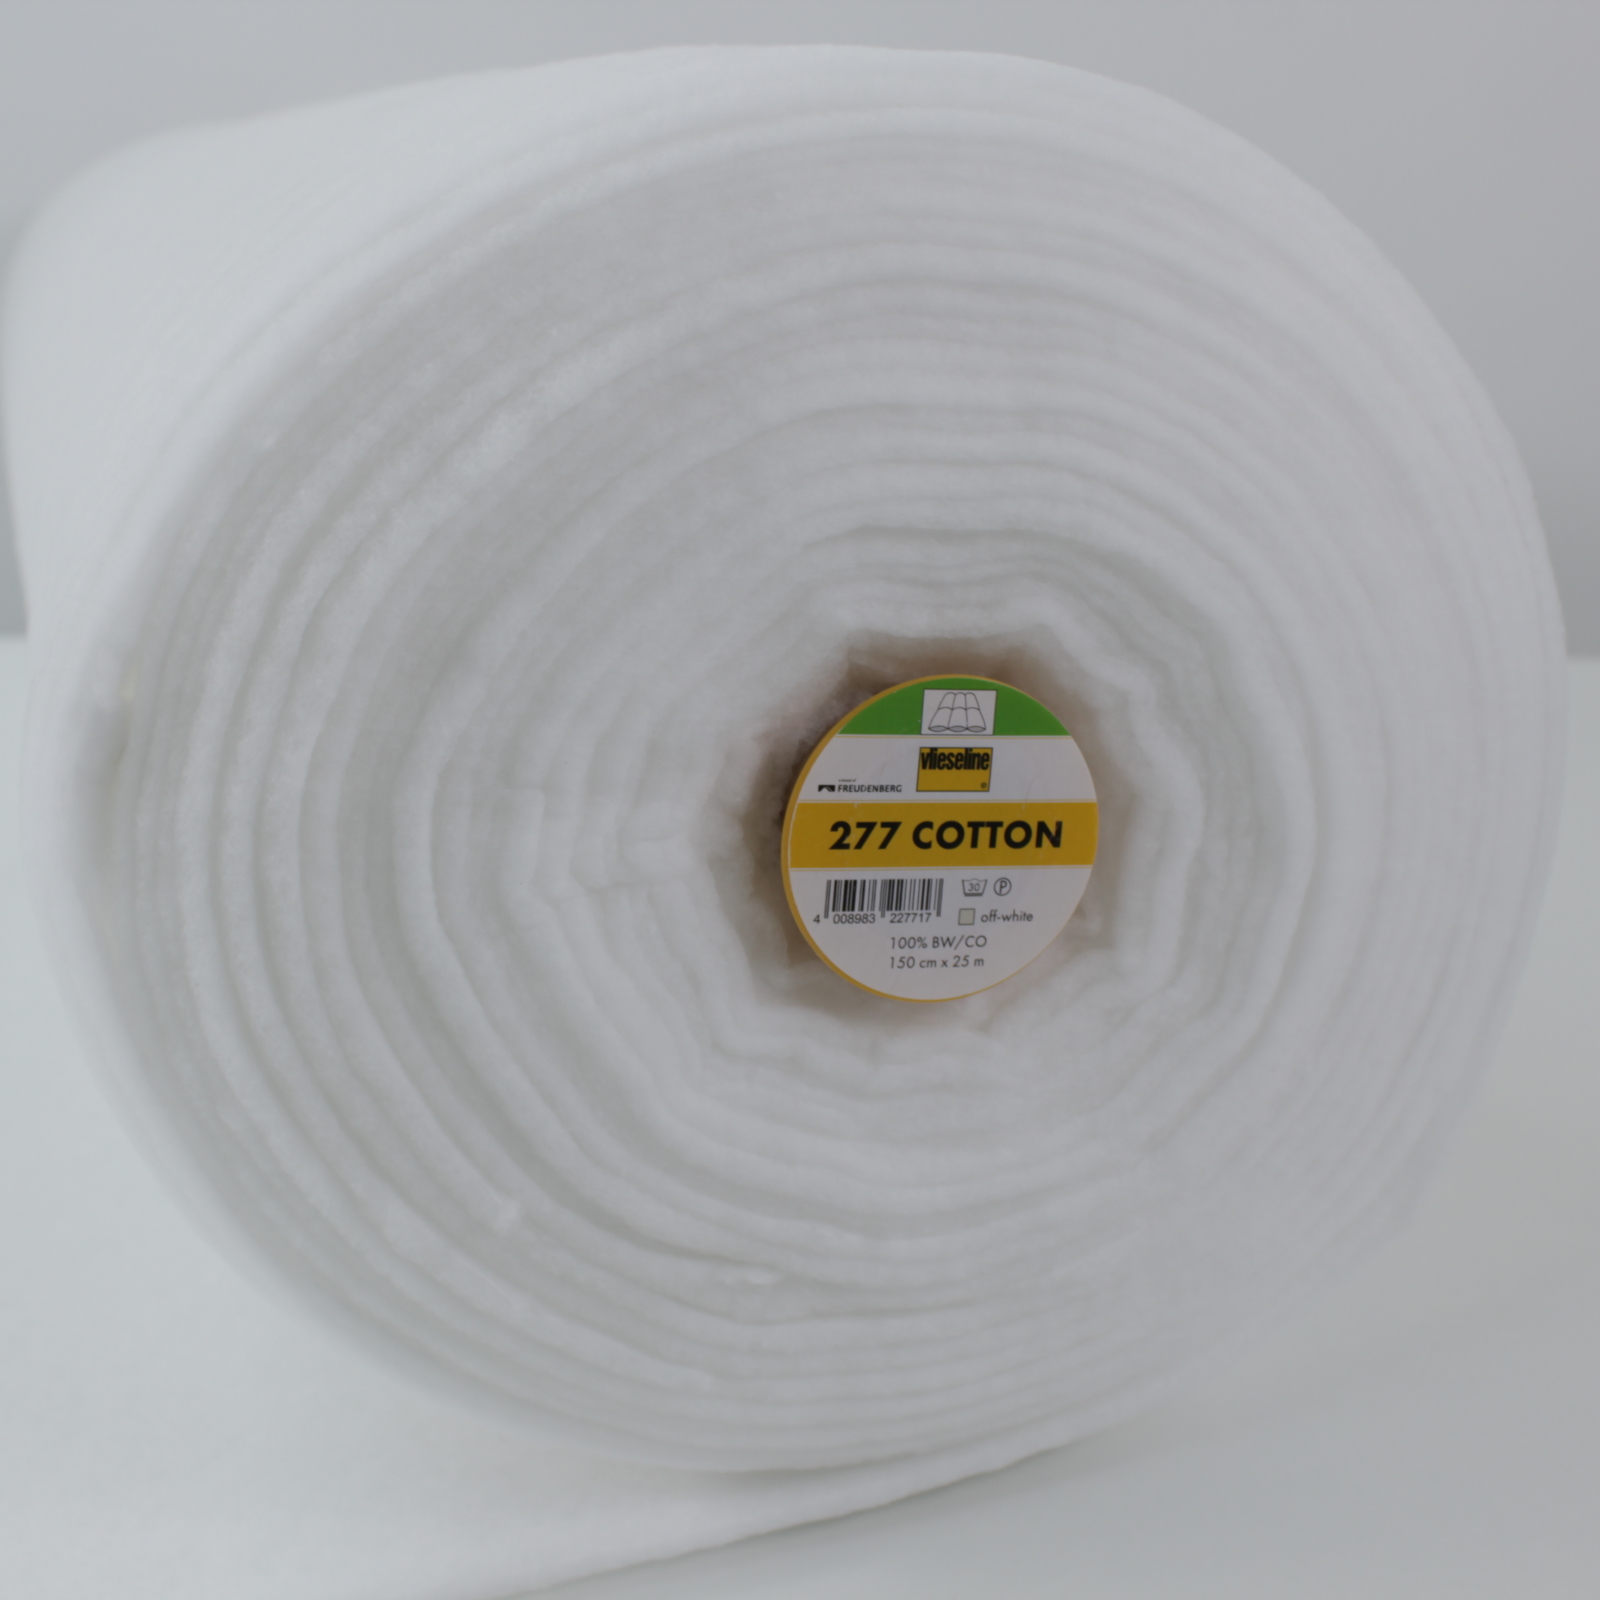 Vlieseline® Vlies Meterware 277 Cotton off-white